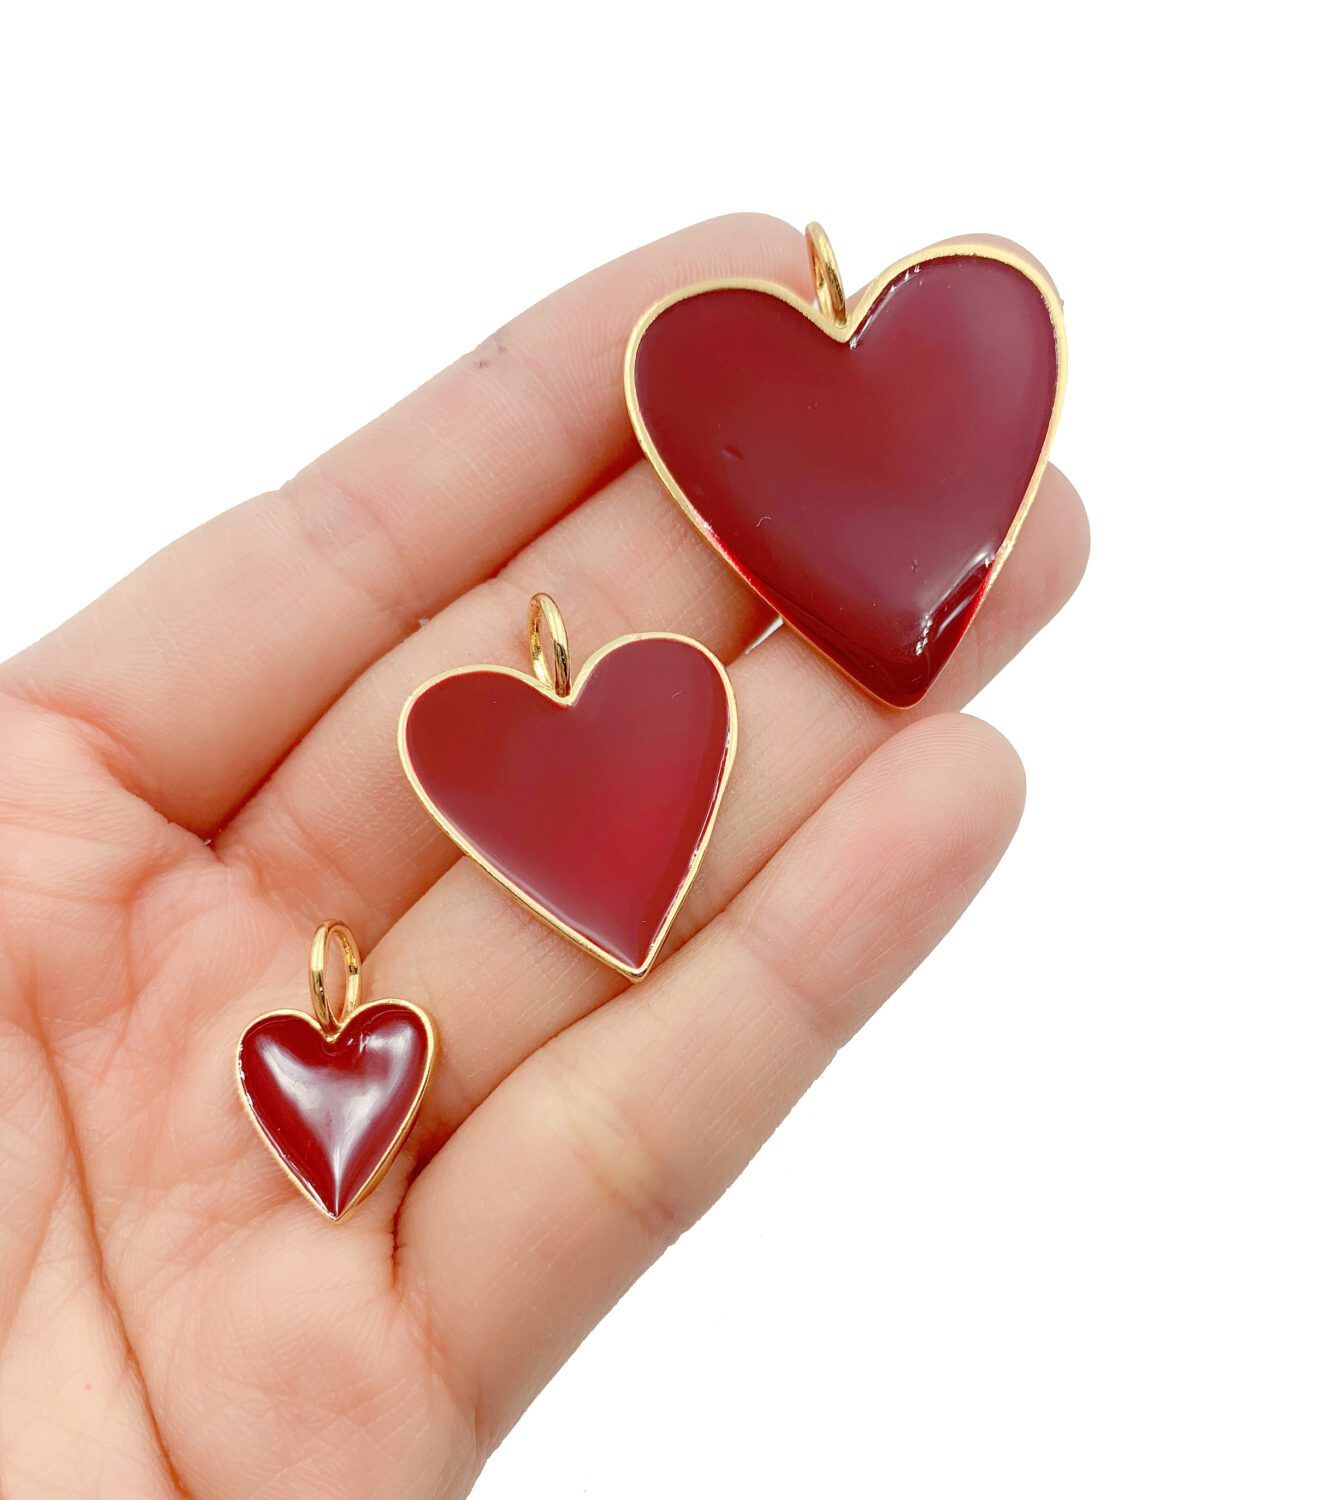 Noverlife 96pcs Valentine's Day Enamel Heart Charms, Heart Pendants Metal Heart Charms, Enamel Glitter Red Heart Charms for Bracelet Necklace